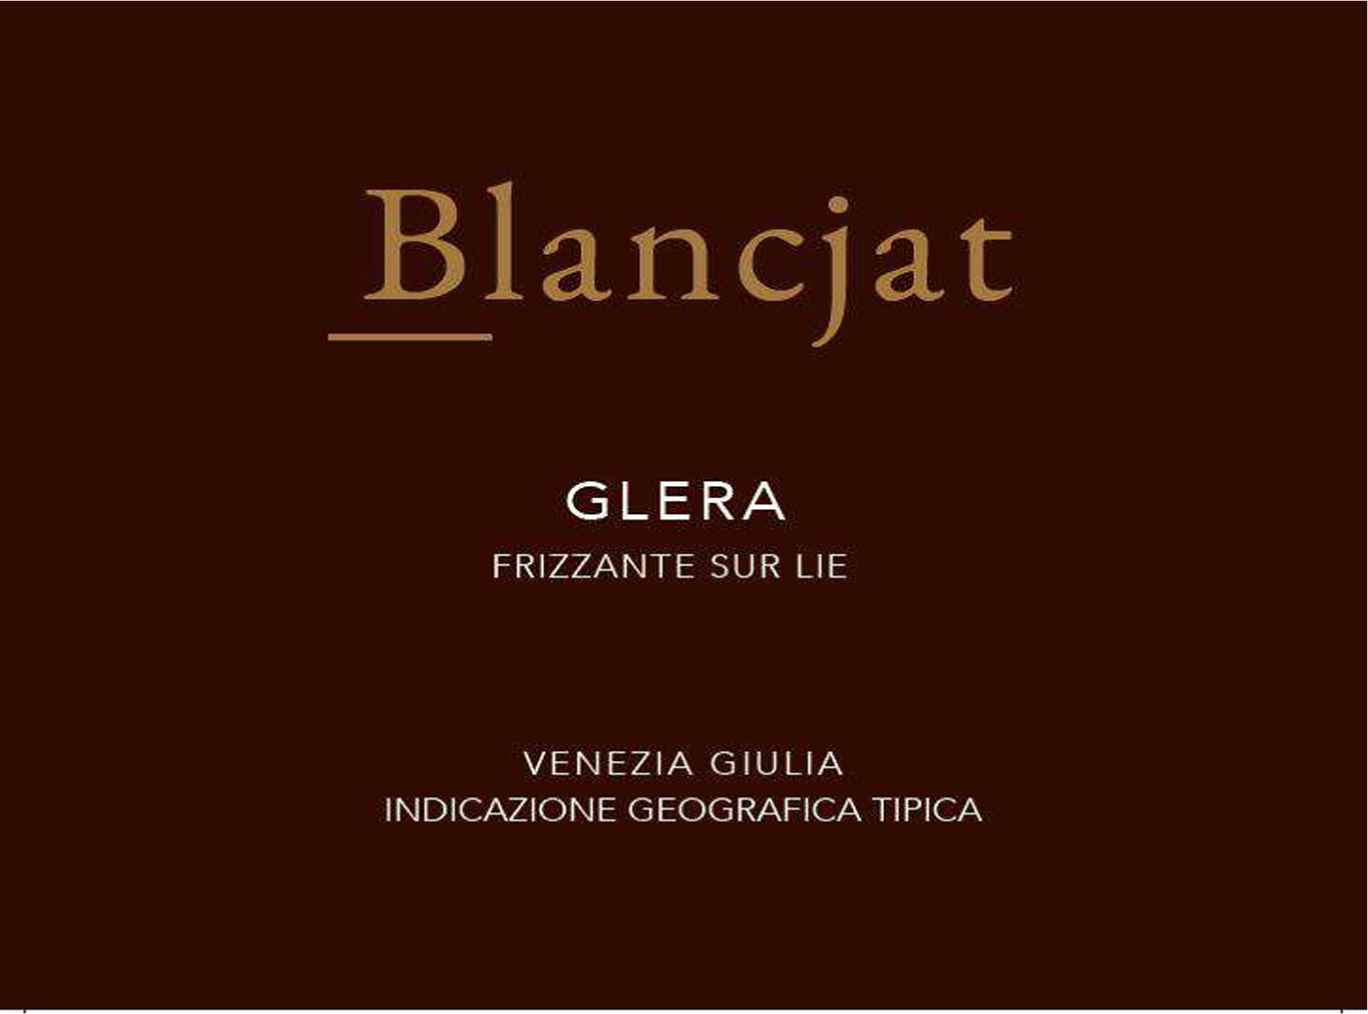 Blancjat - Glera Frizzante Sur Lie label